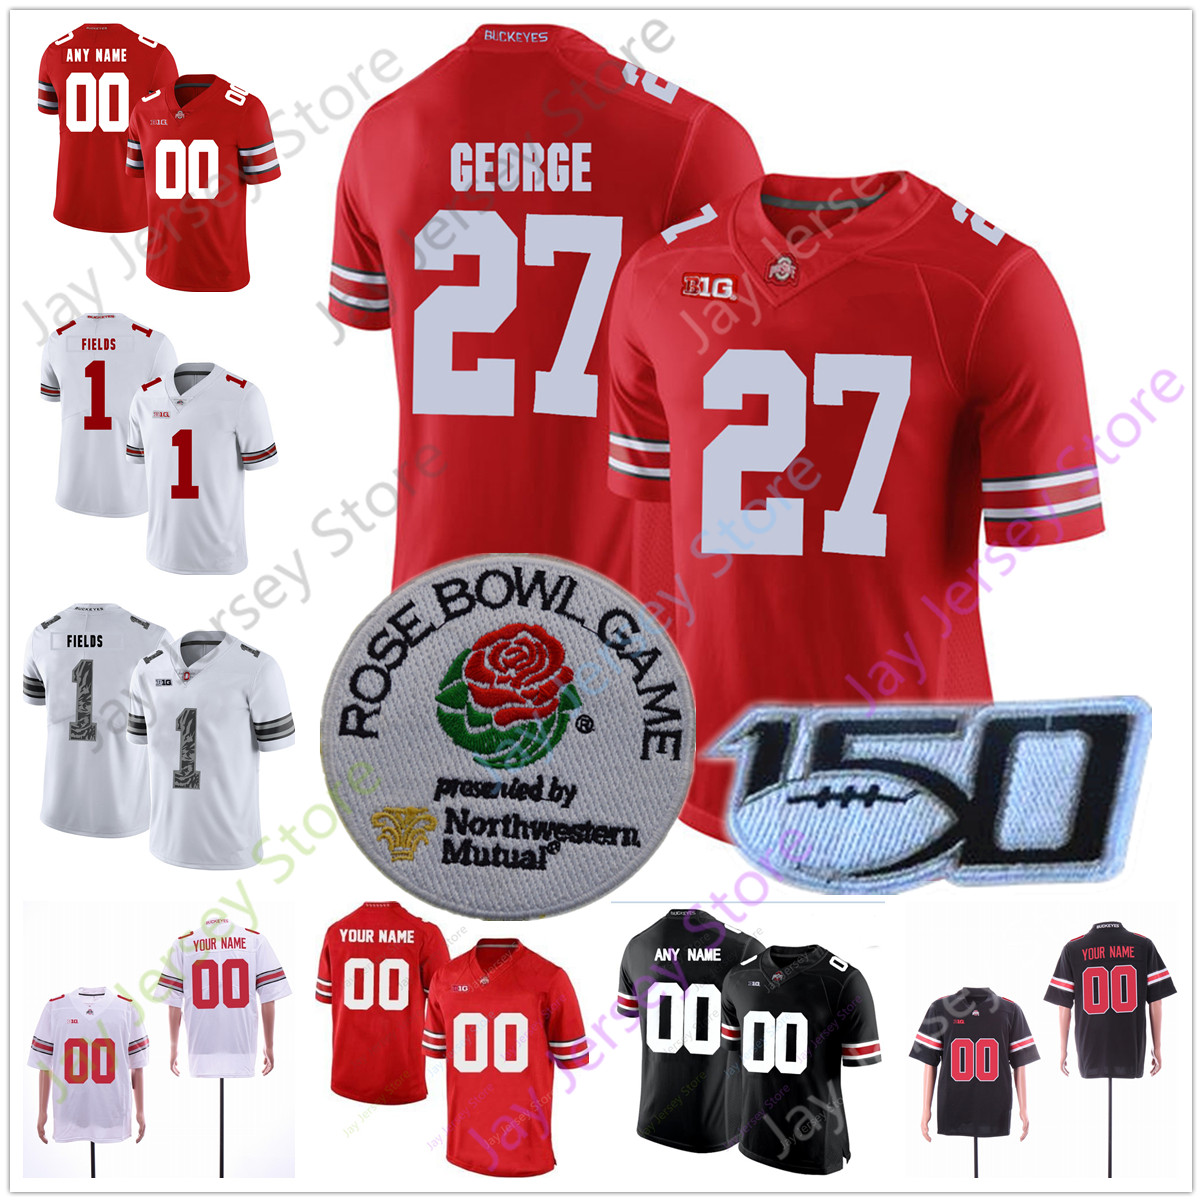 osu football jerseys for sale